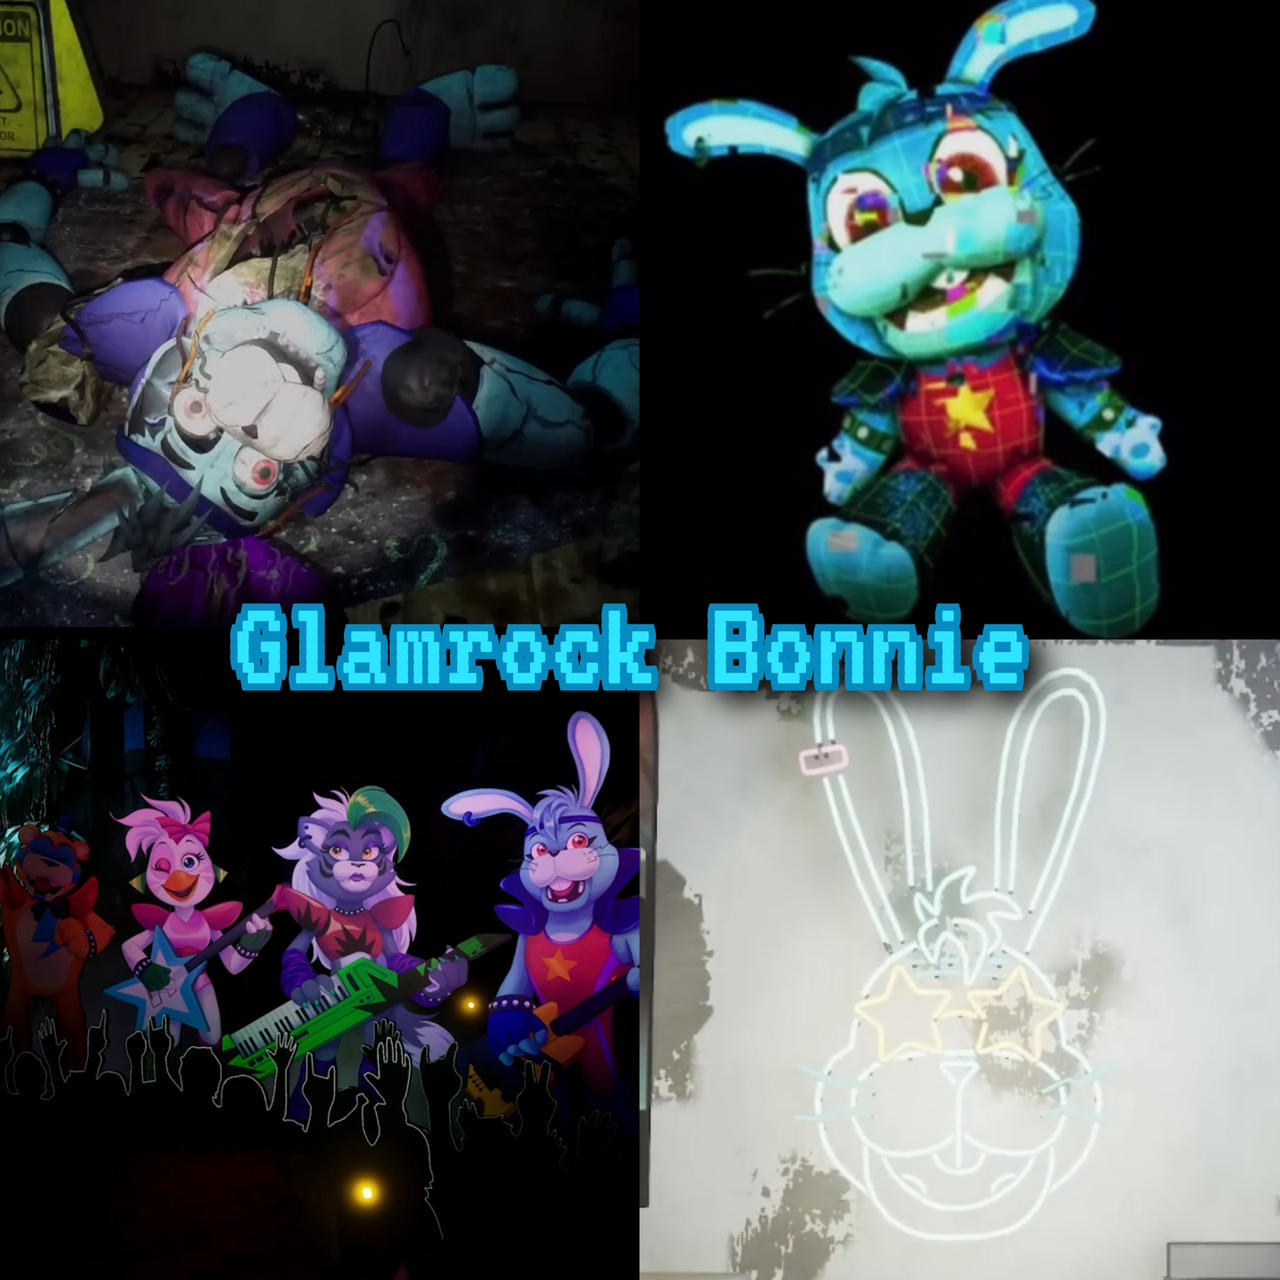 Glamrock bonnie RUIN DLC by TheDinosaurian on DeviantArt